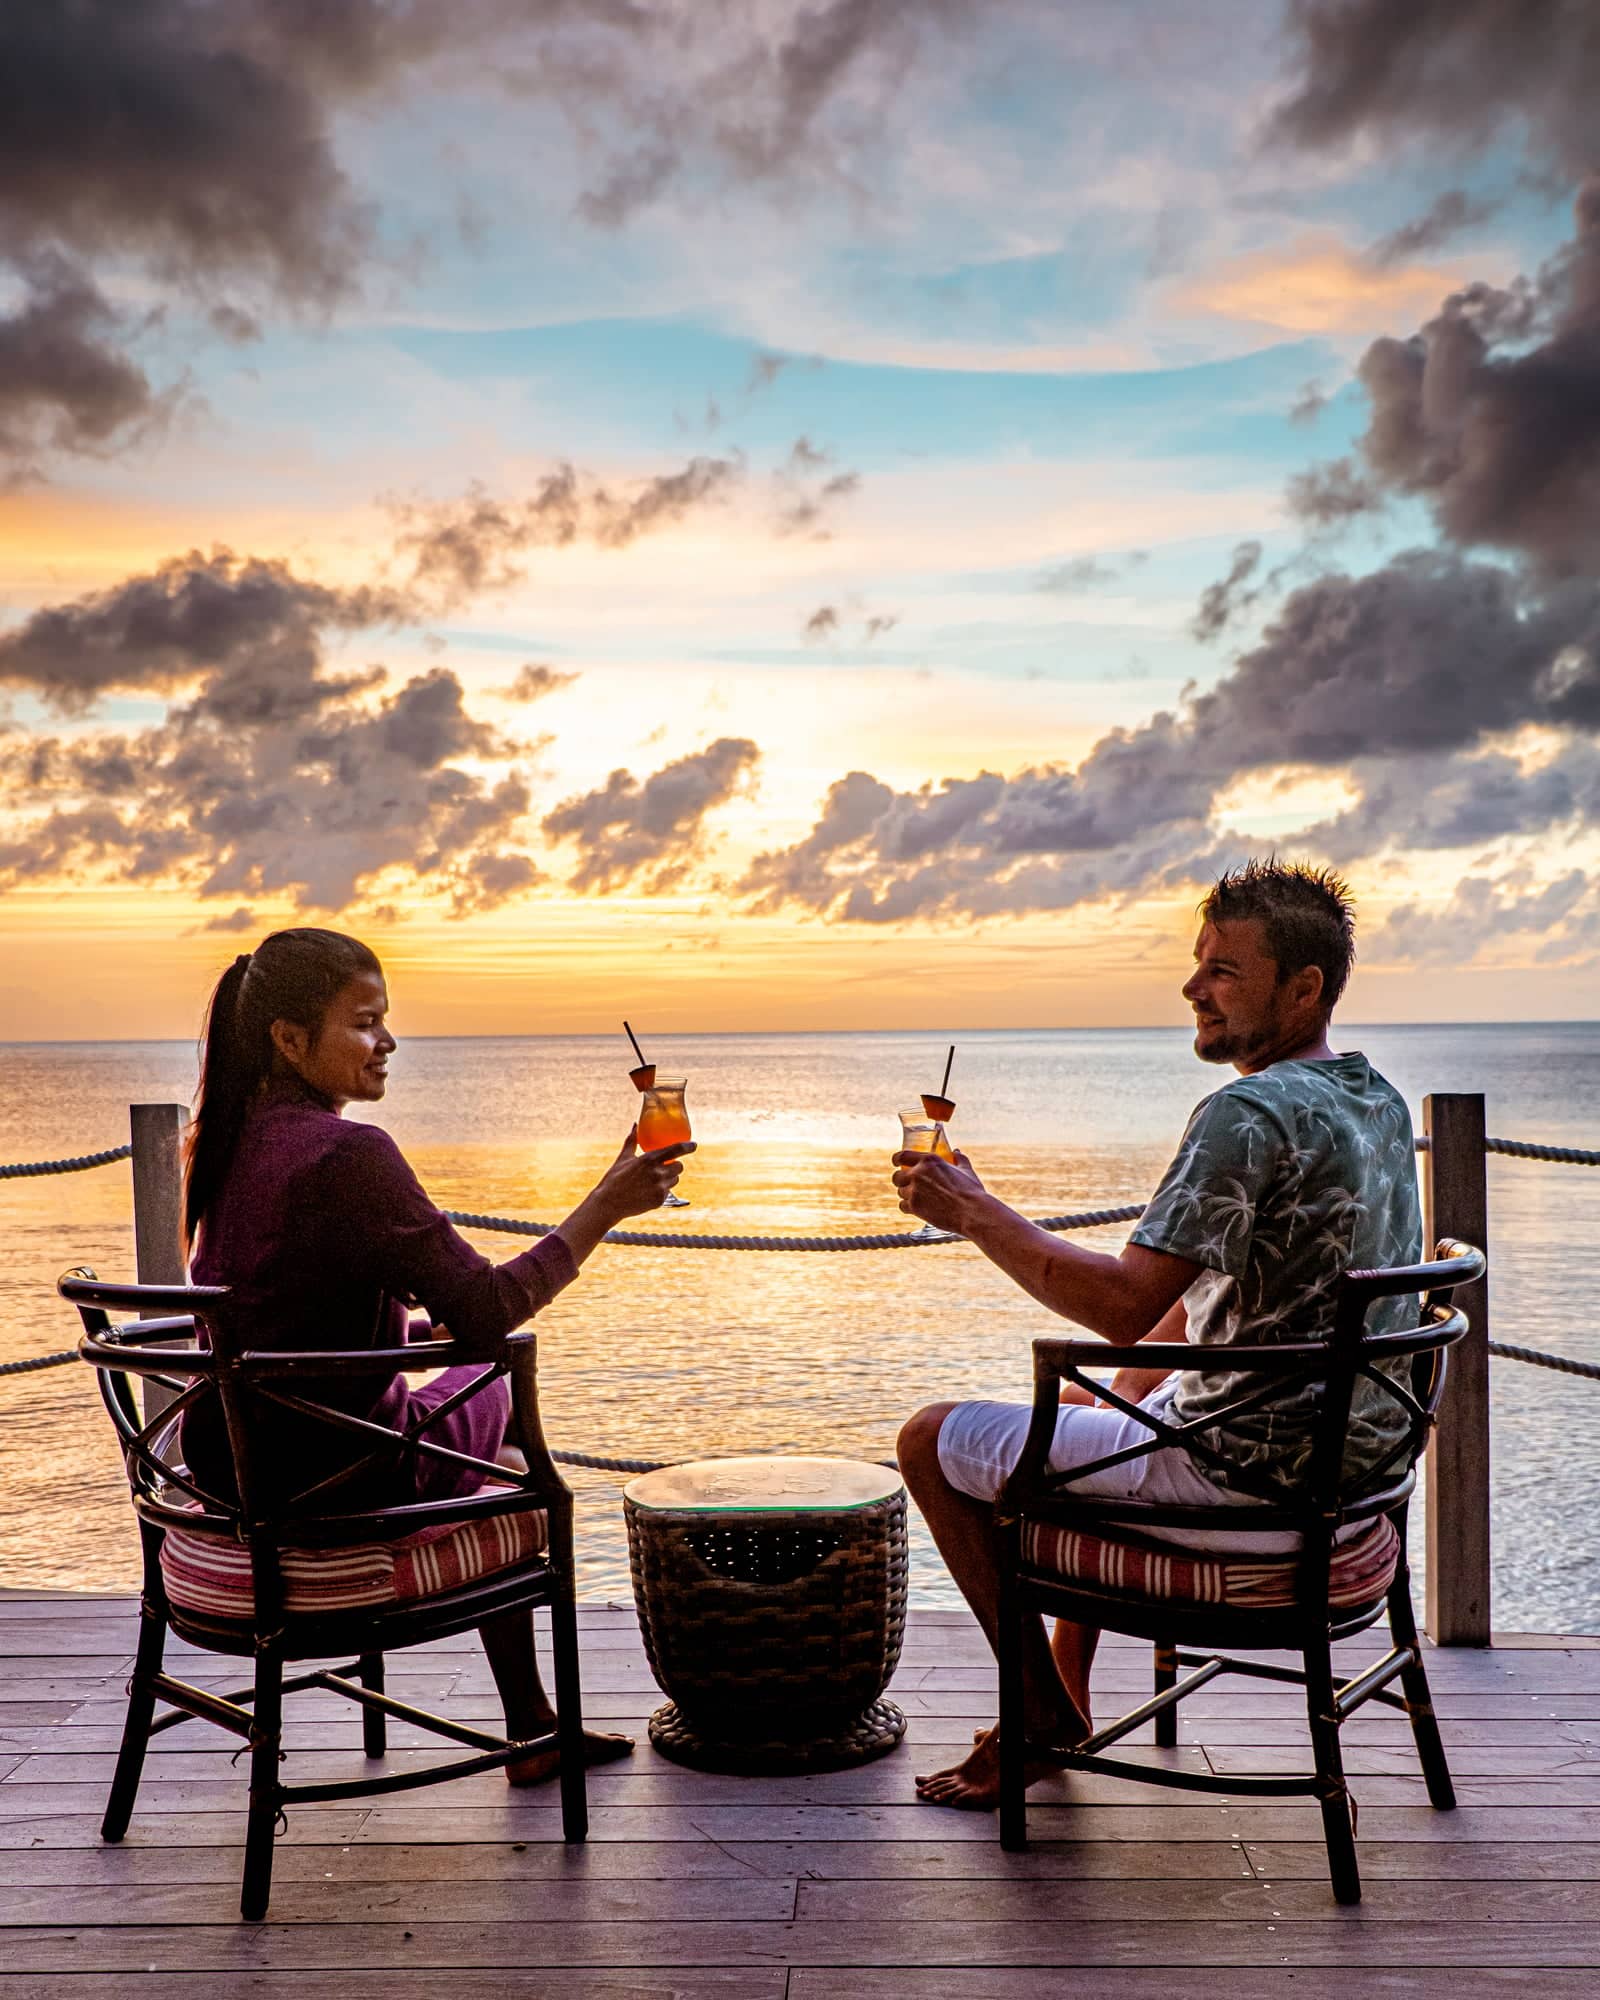 Saint-Lucia-Caribbean-Island-couple-on-luxury-vatation